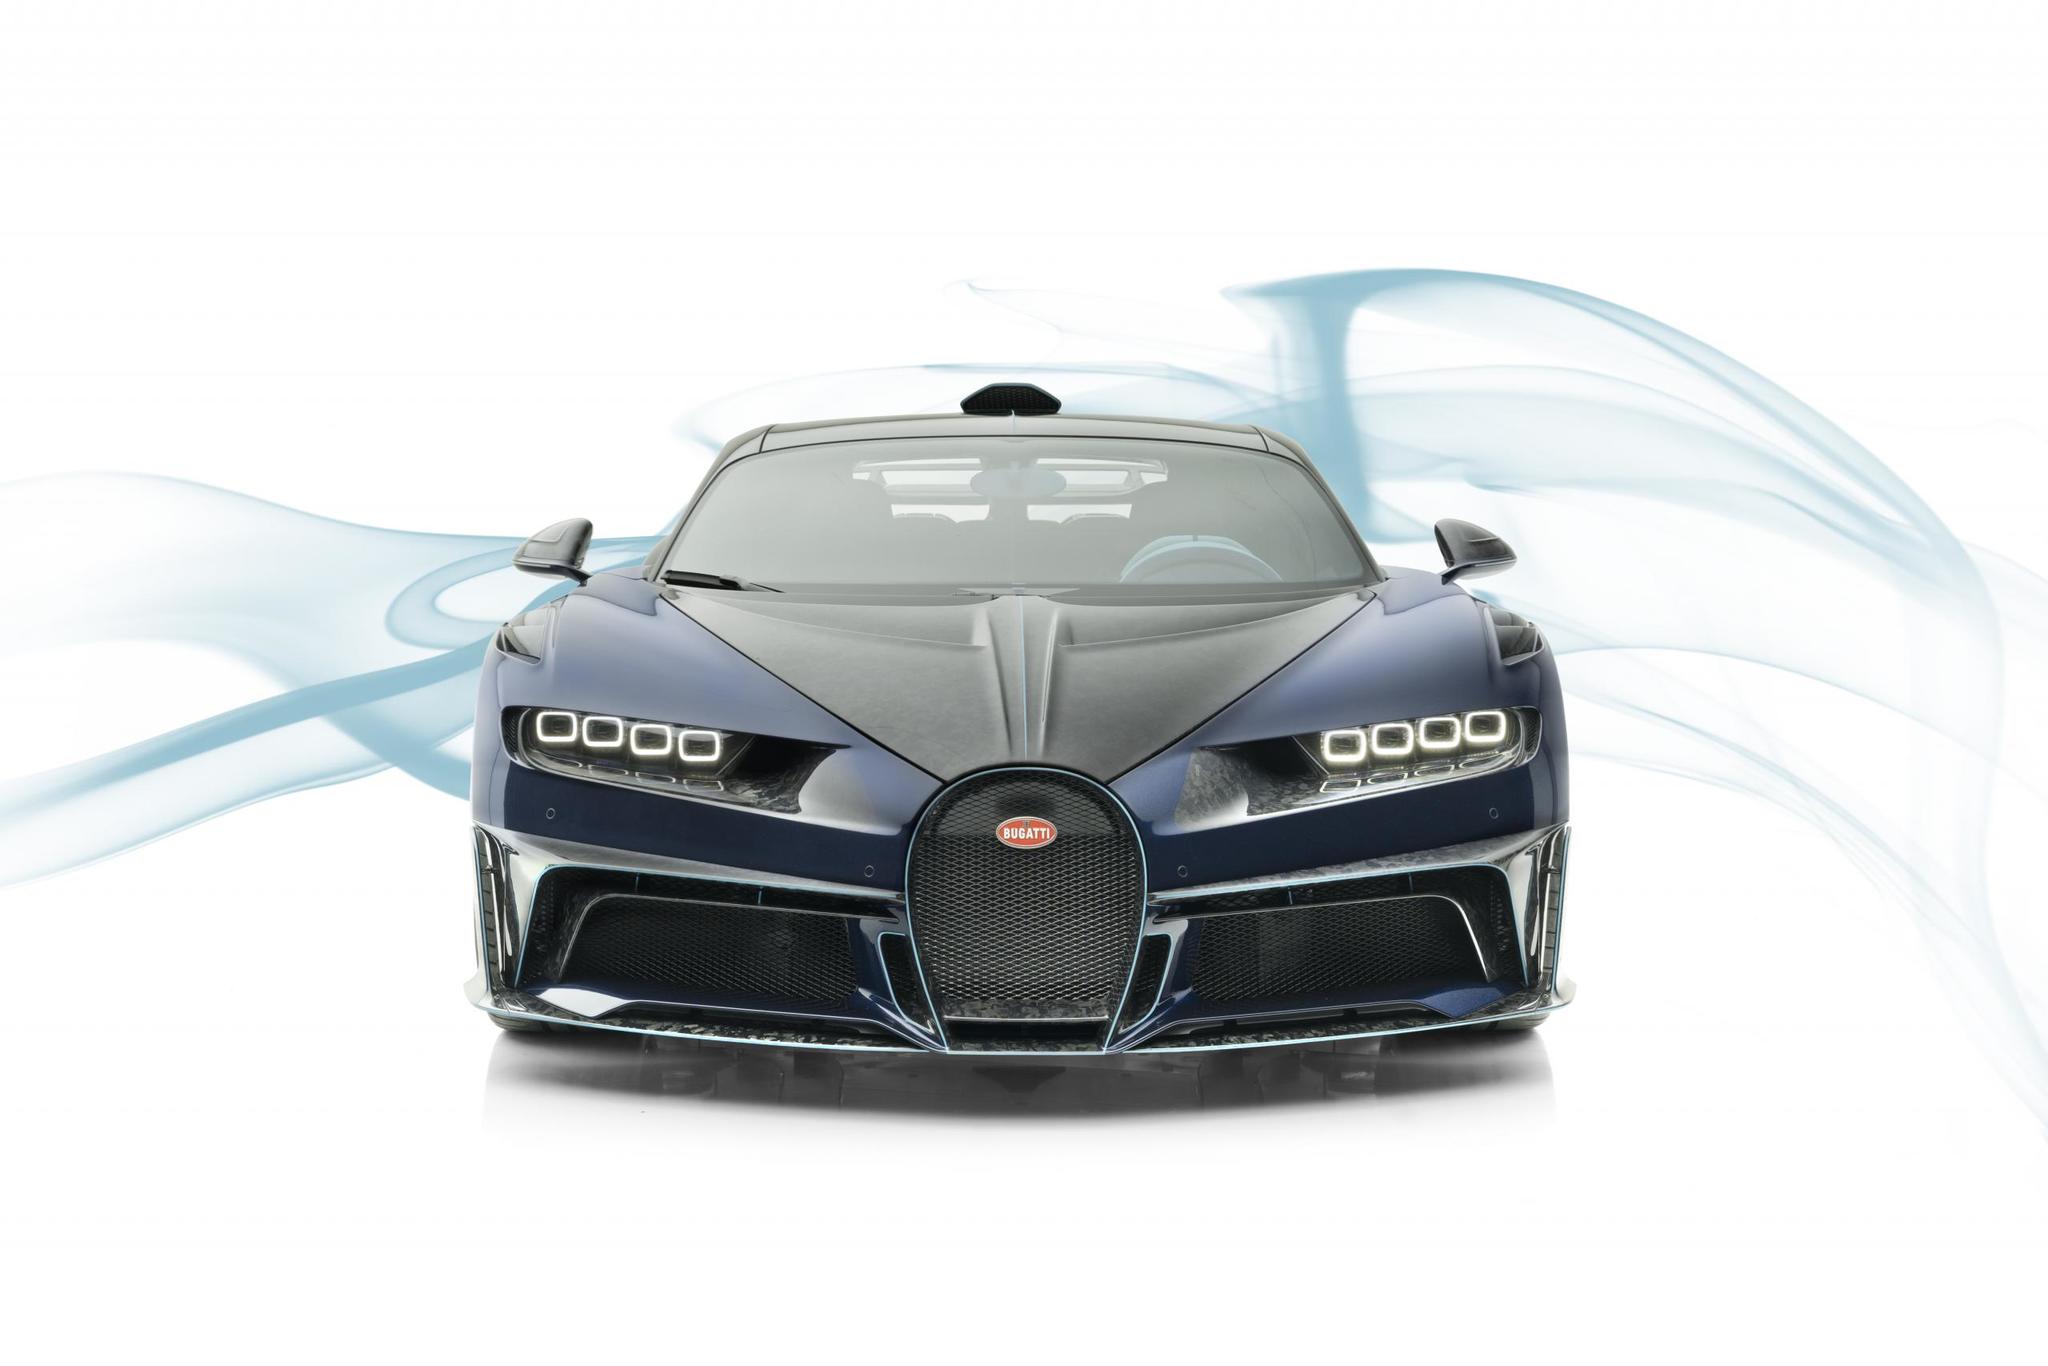 Mansory body kit for Bugatti Chiron carbon